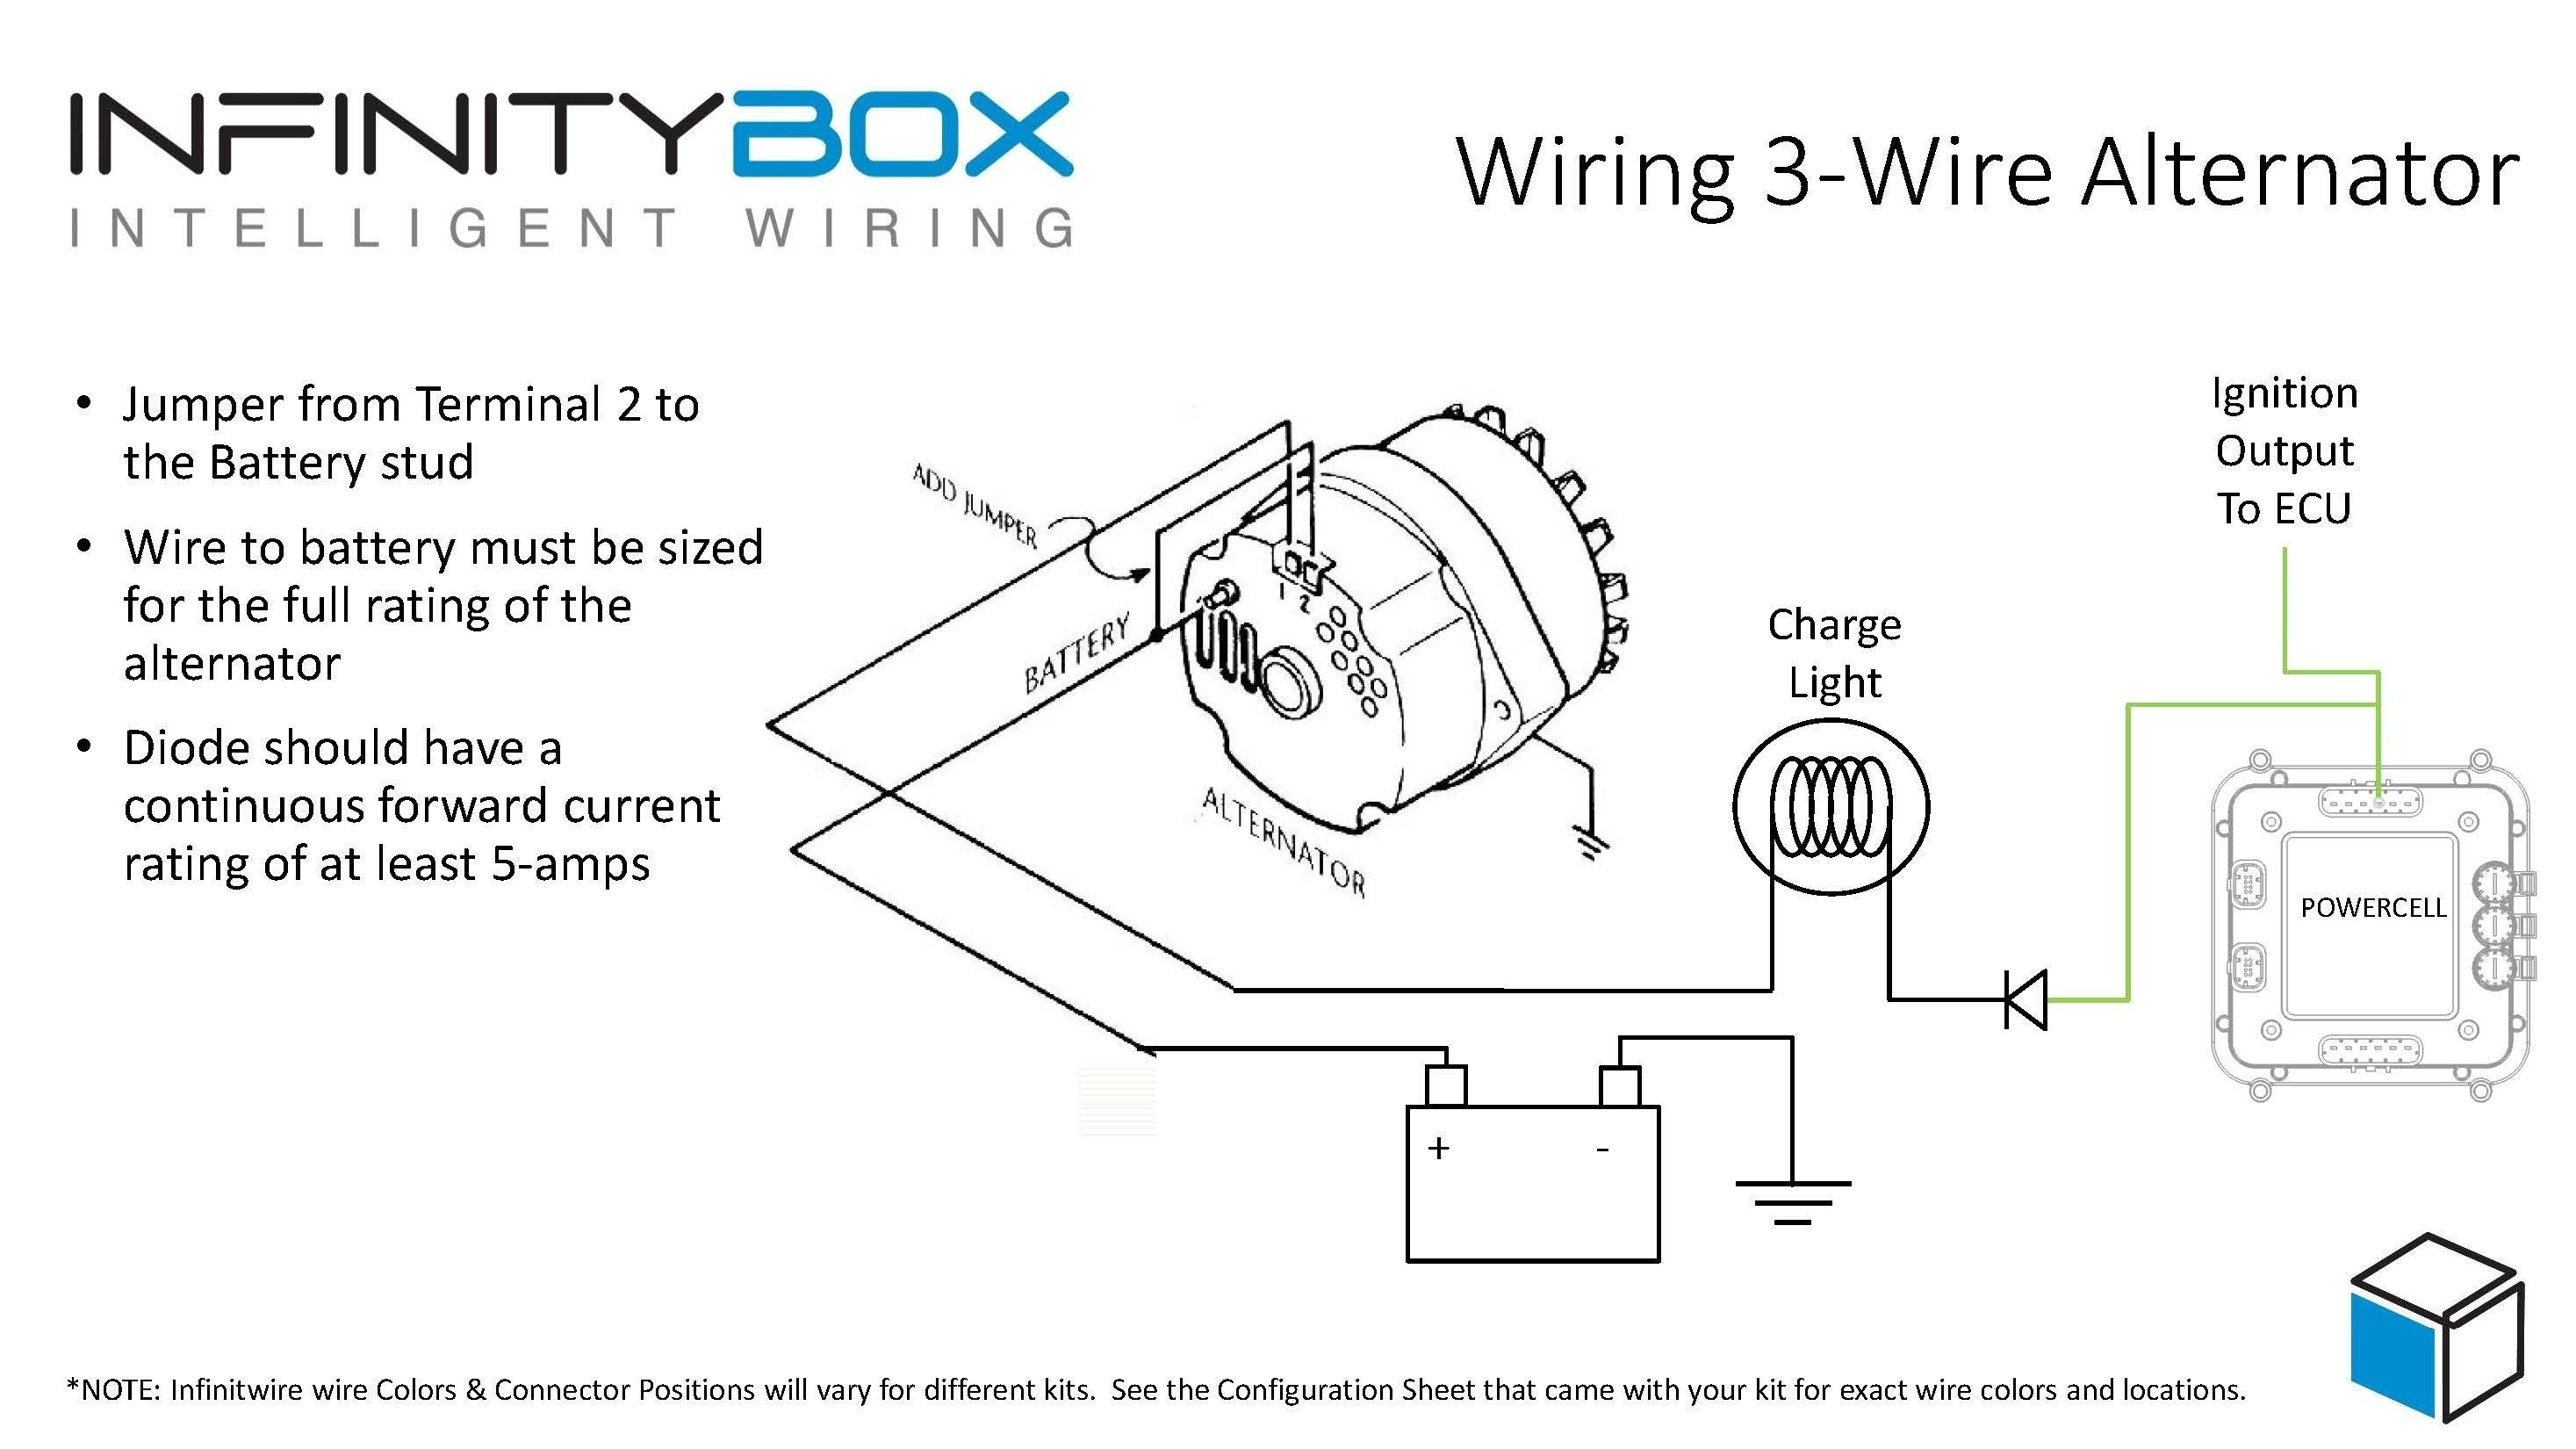 Wiring Diagram e Wire Alternator Awesome Wiring Diagram E Wire Alternator New Gm Alternator Wiring Diagram